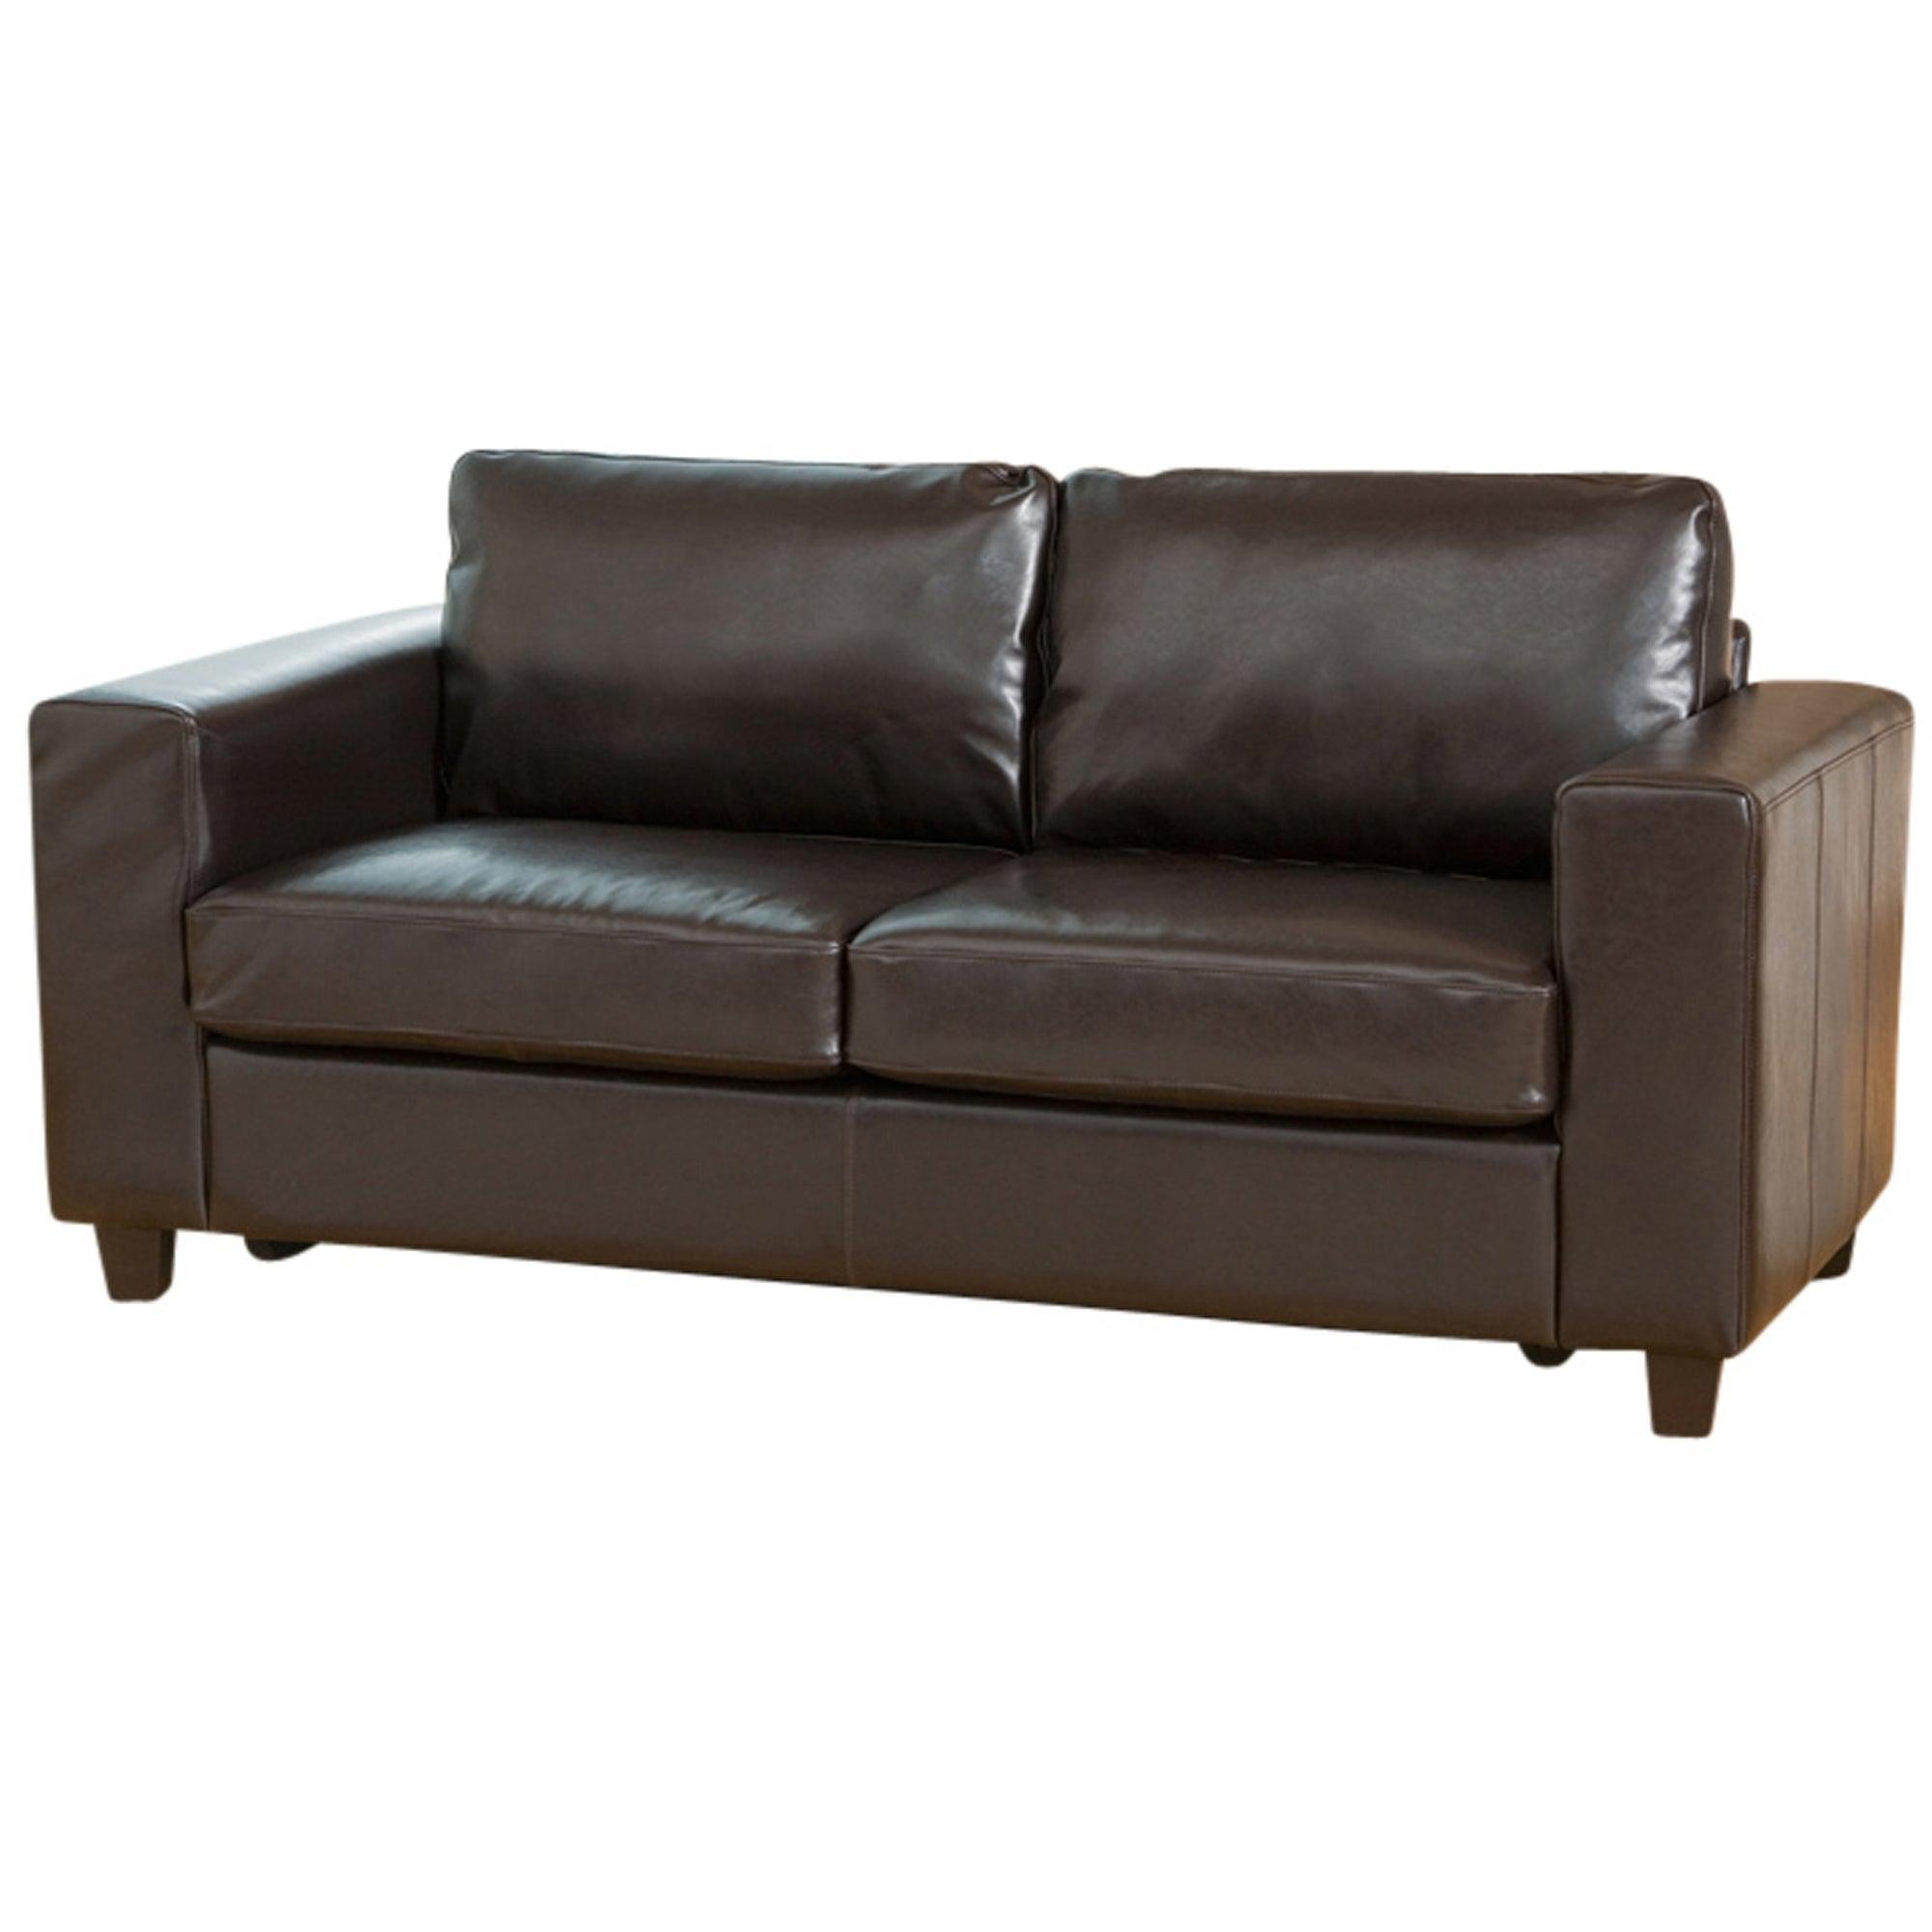 Maddie Leather Sofa / Sofa Bed Collection - Lakeland Sofa Warehouse